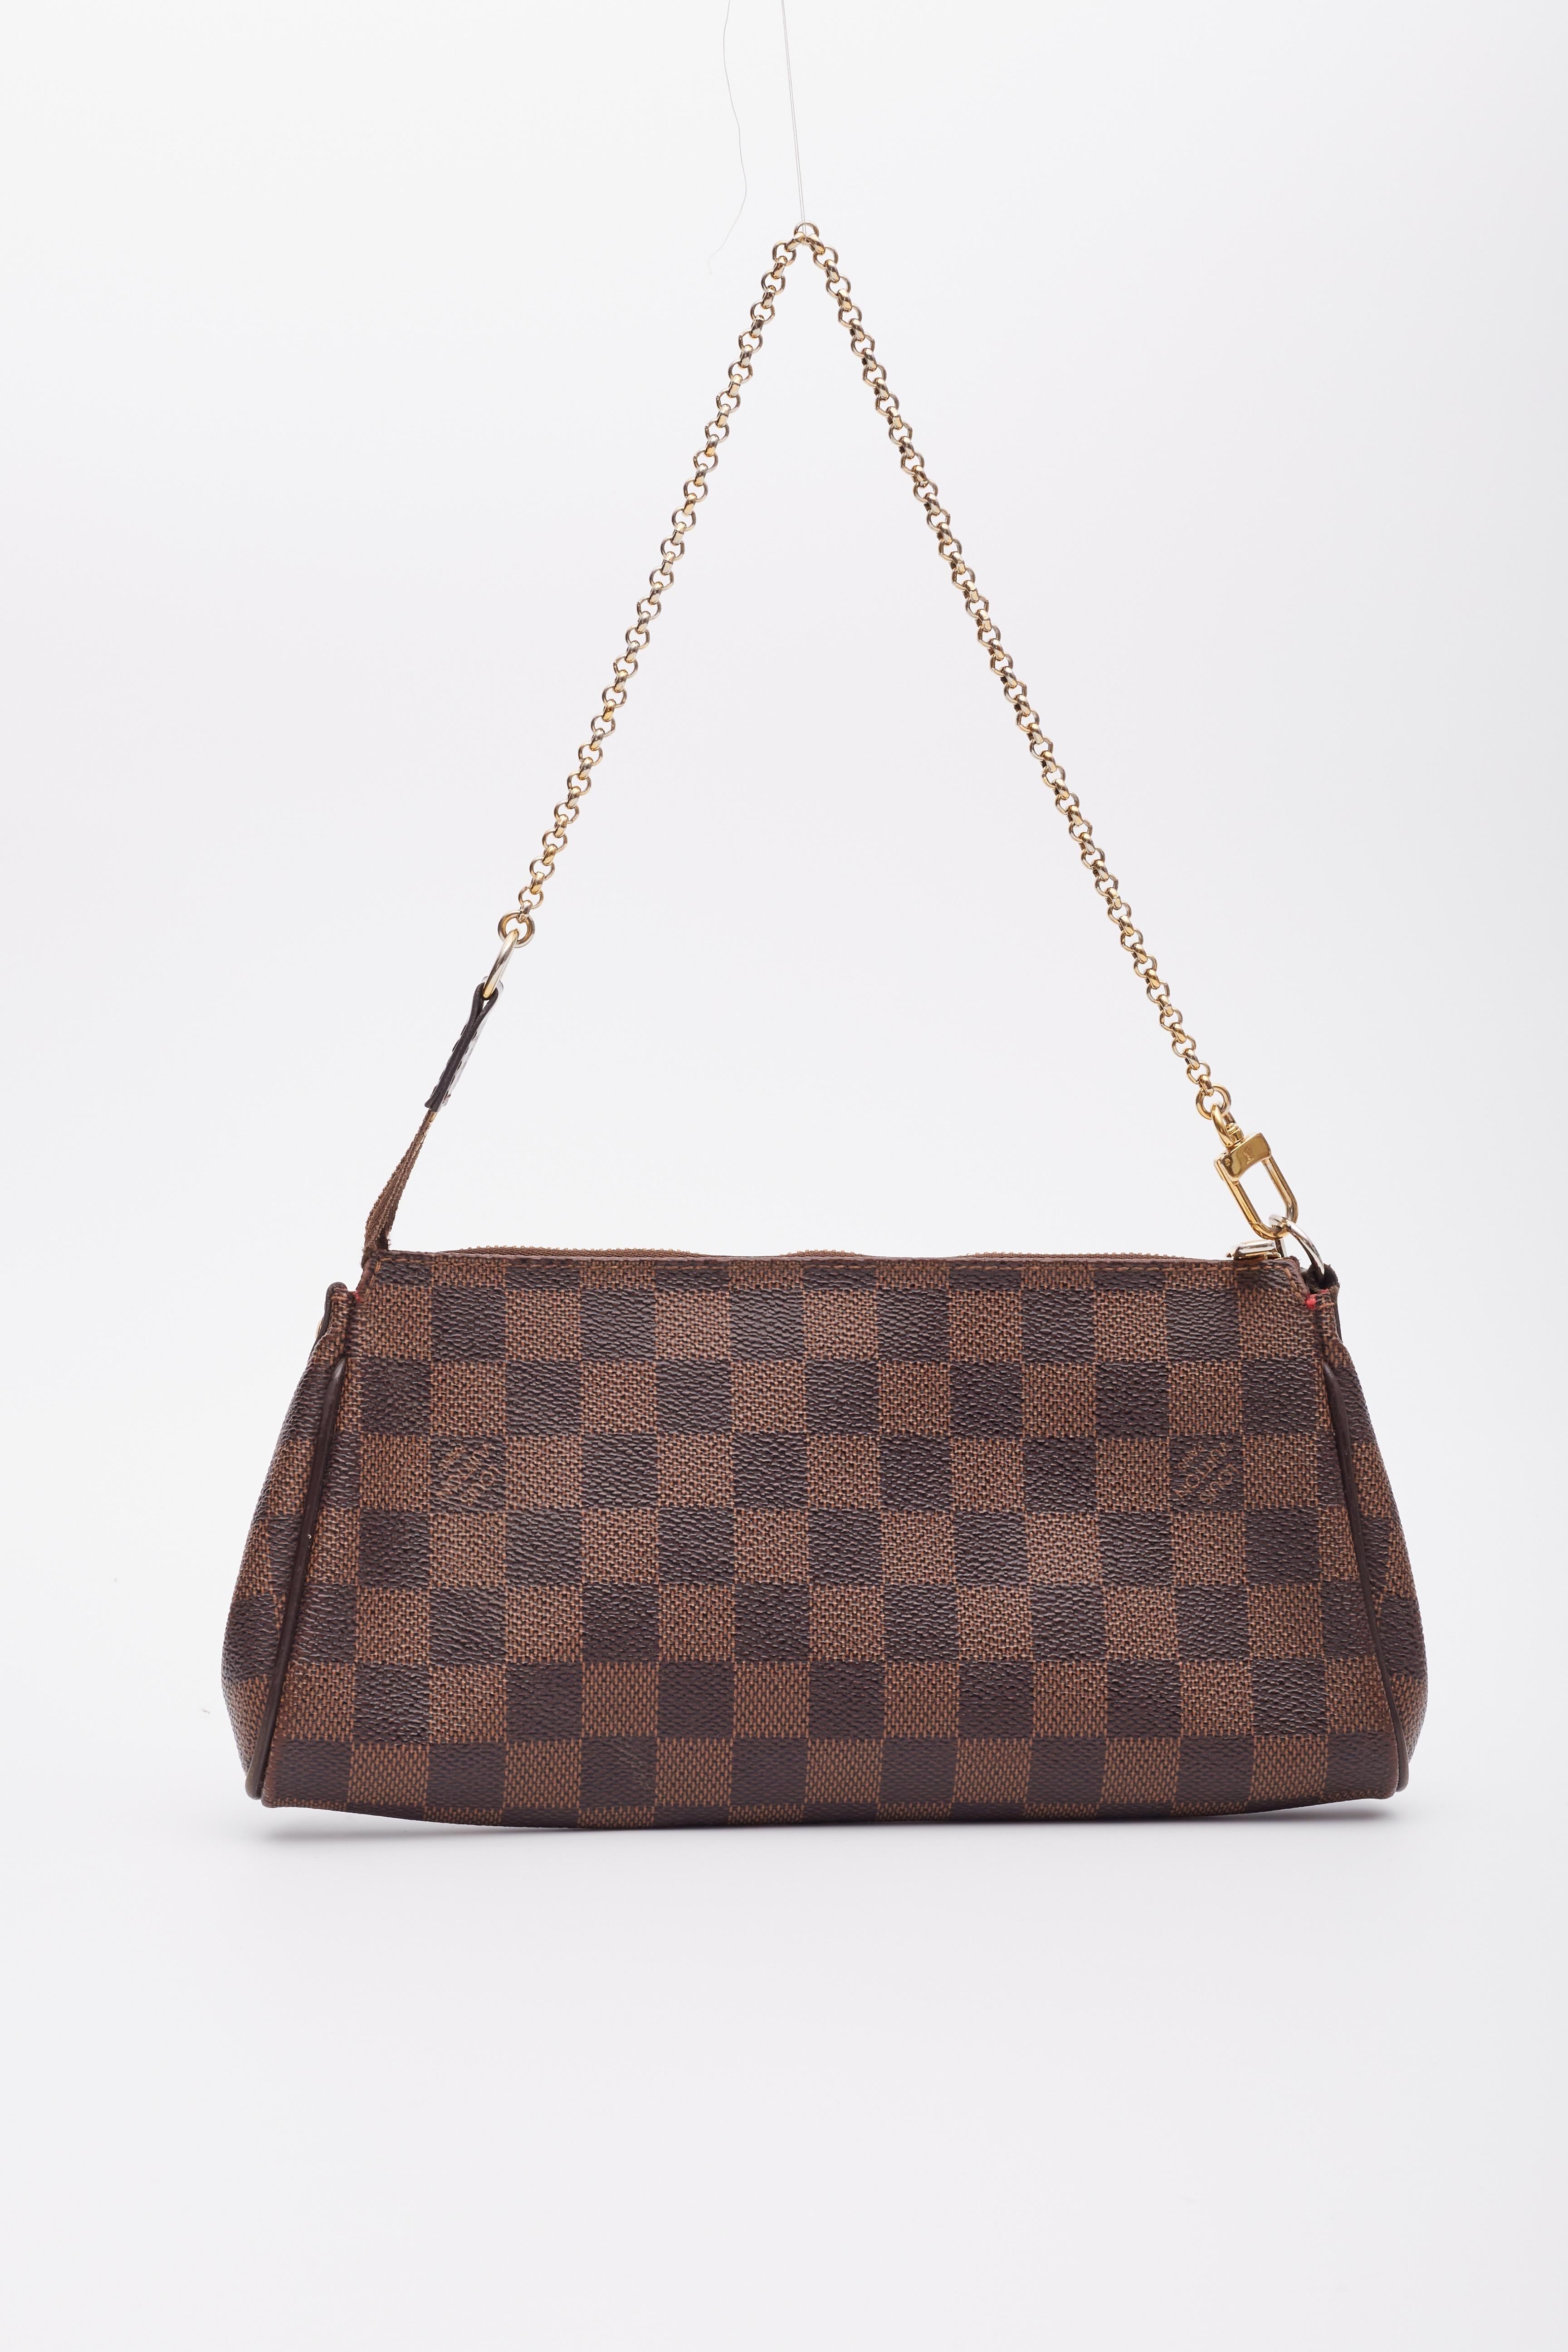 Louis Vuitton Damier Ebene Eva Clutch Bag In Good Condition For Sale In Montreal, Quebec